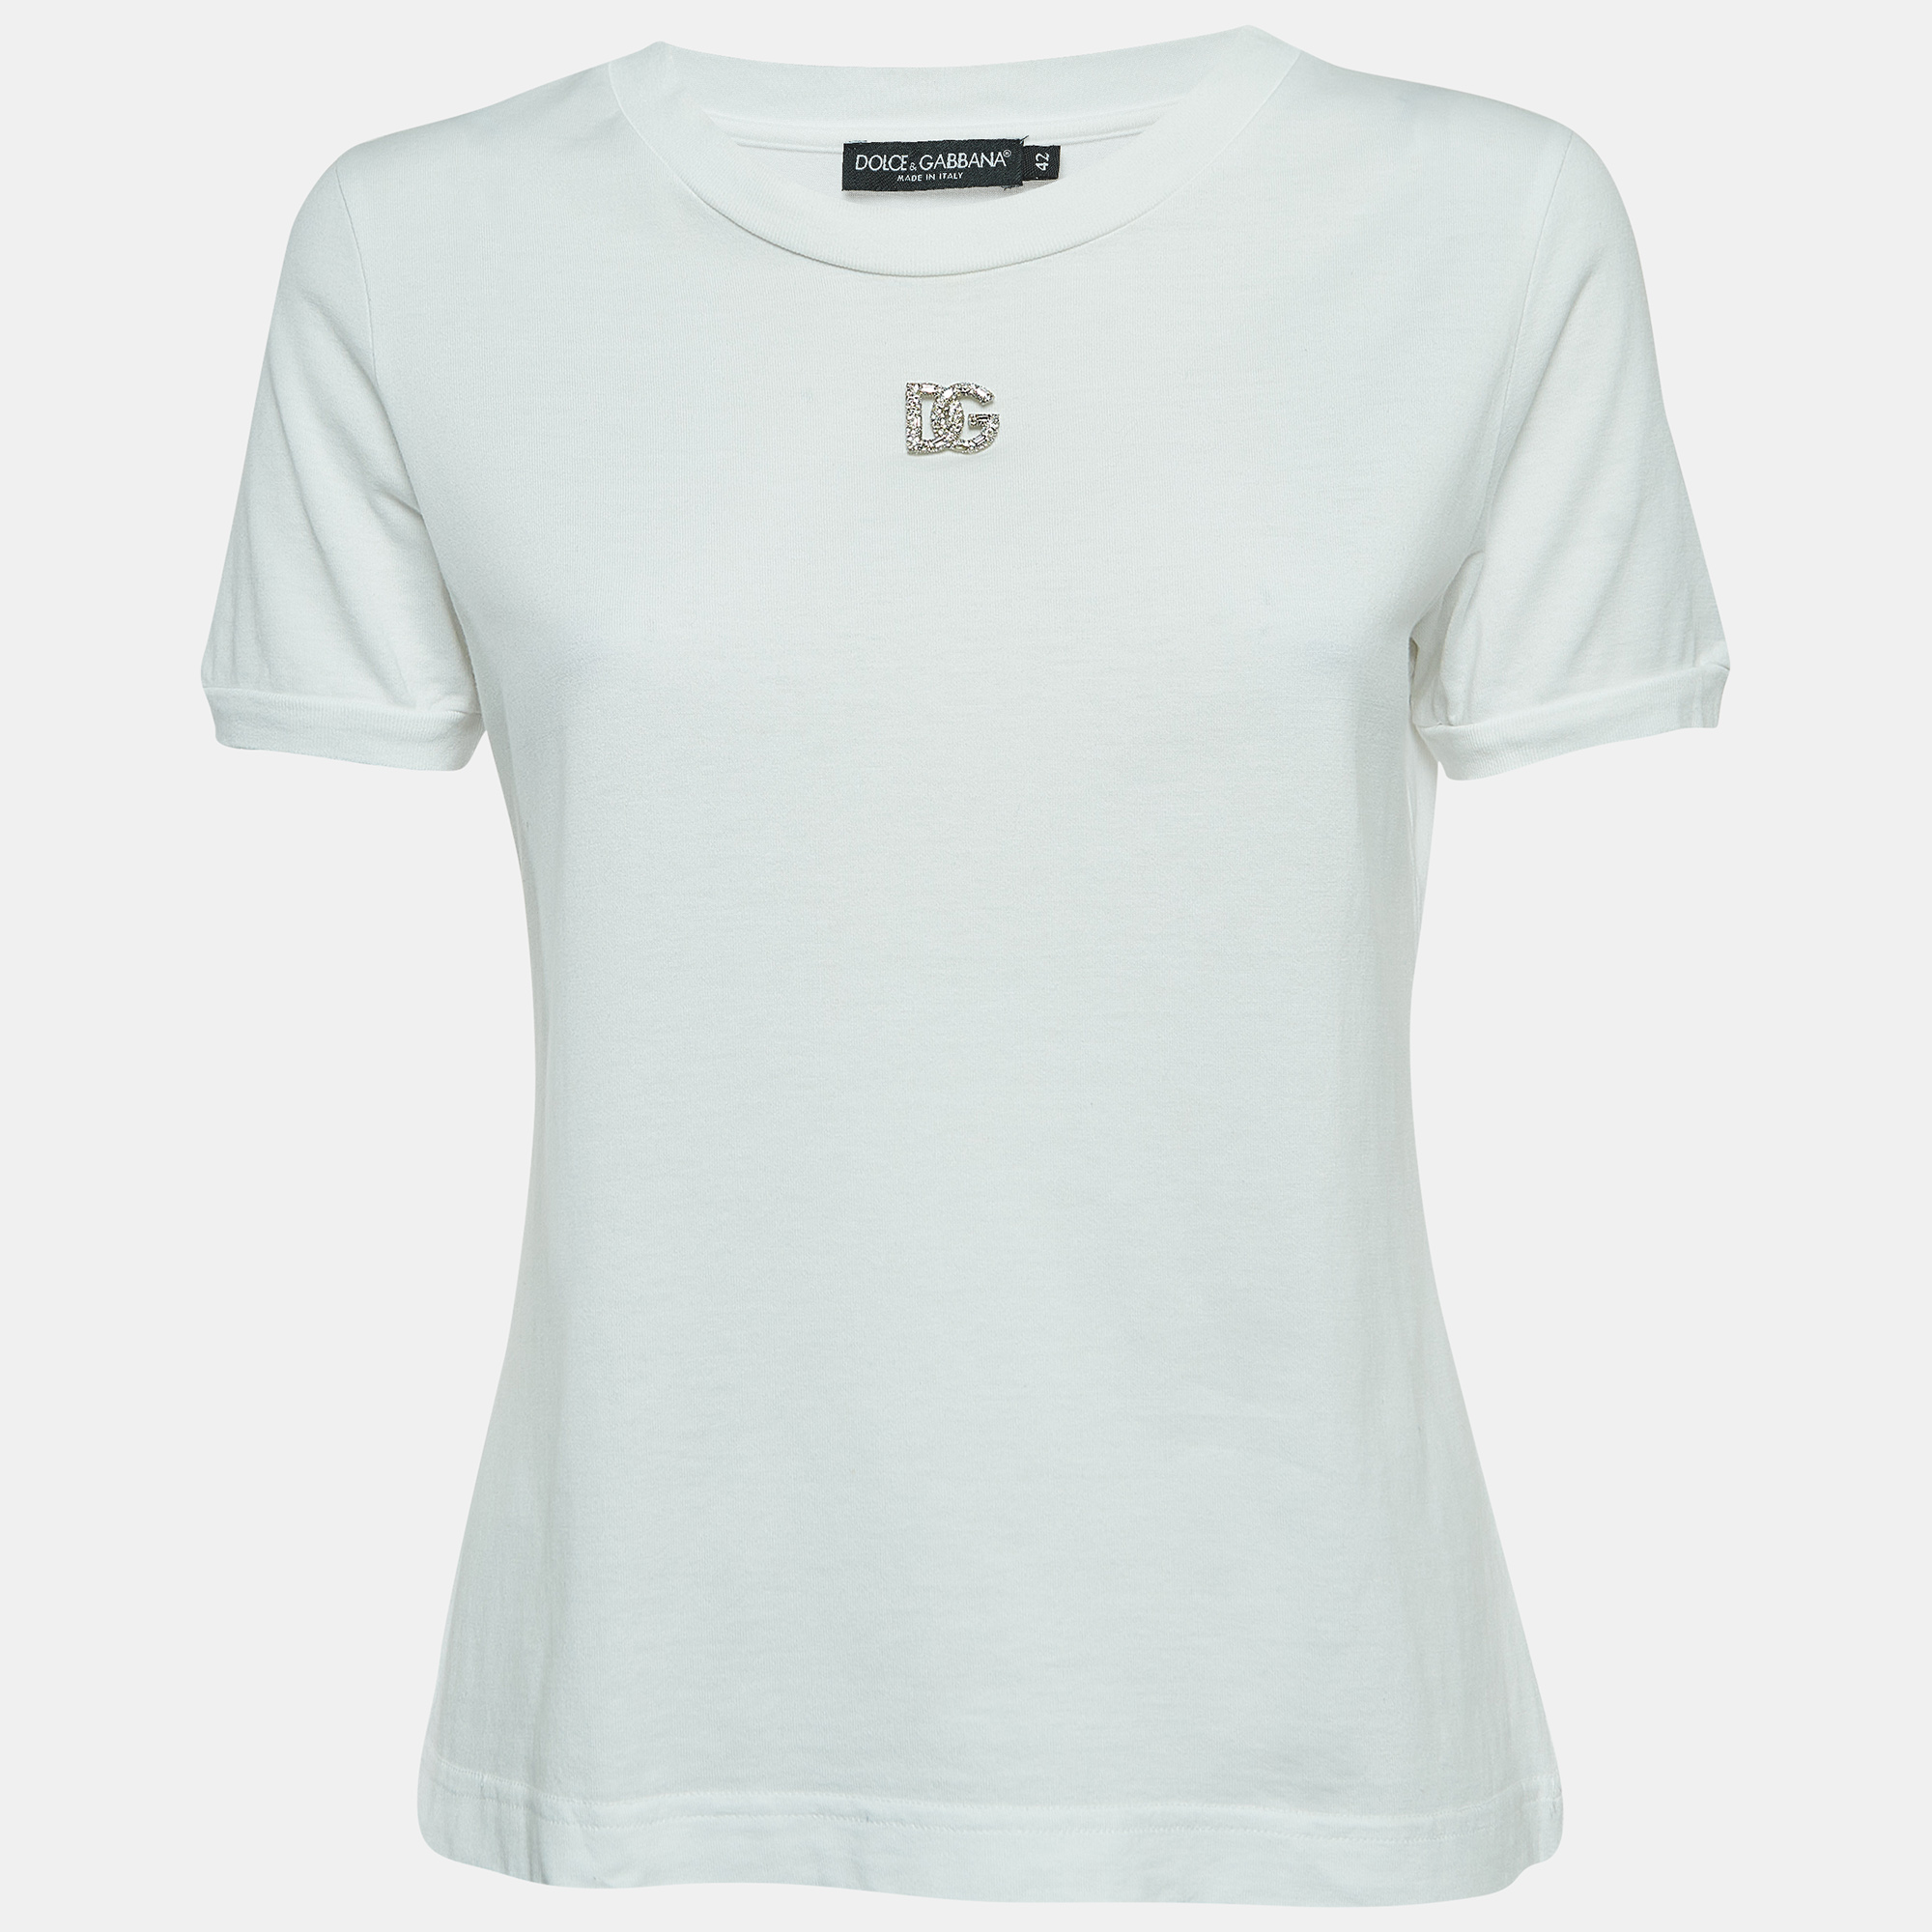 Dolce & Gabbana White Cotton Crystal Embellished Logo T-Shirt M